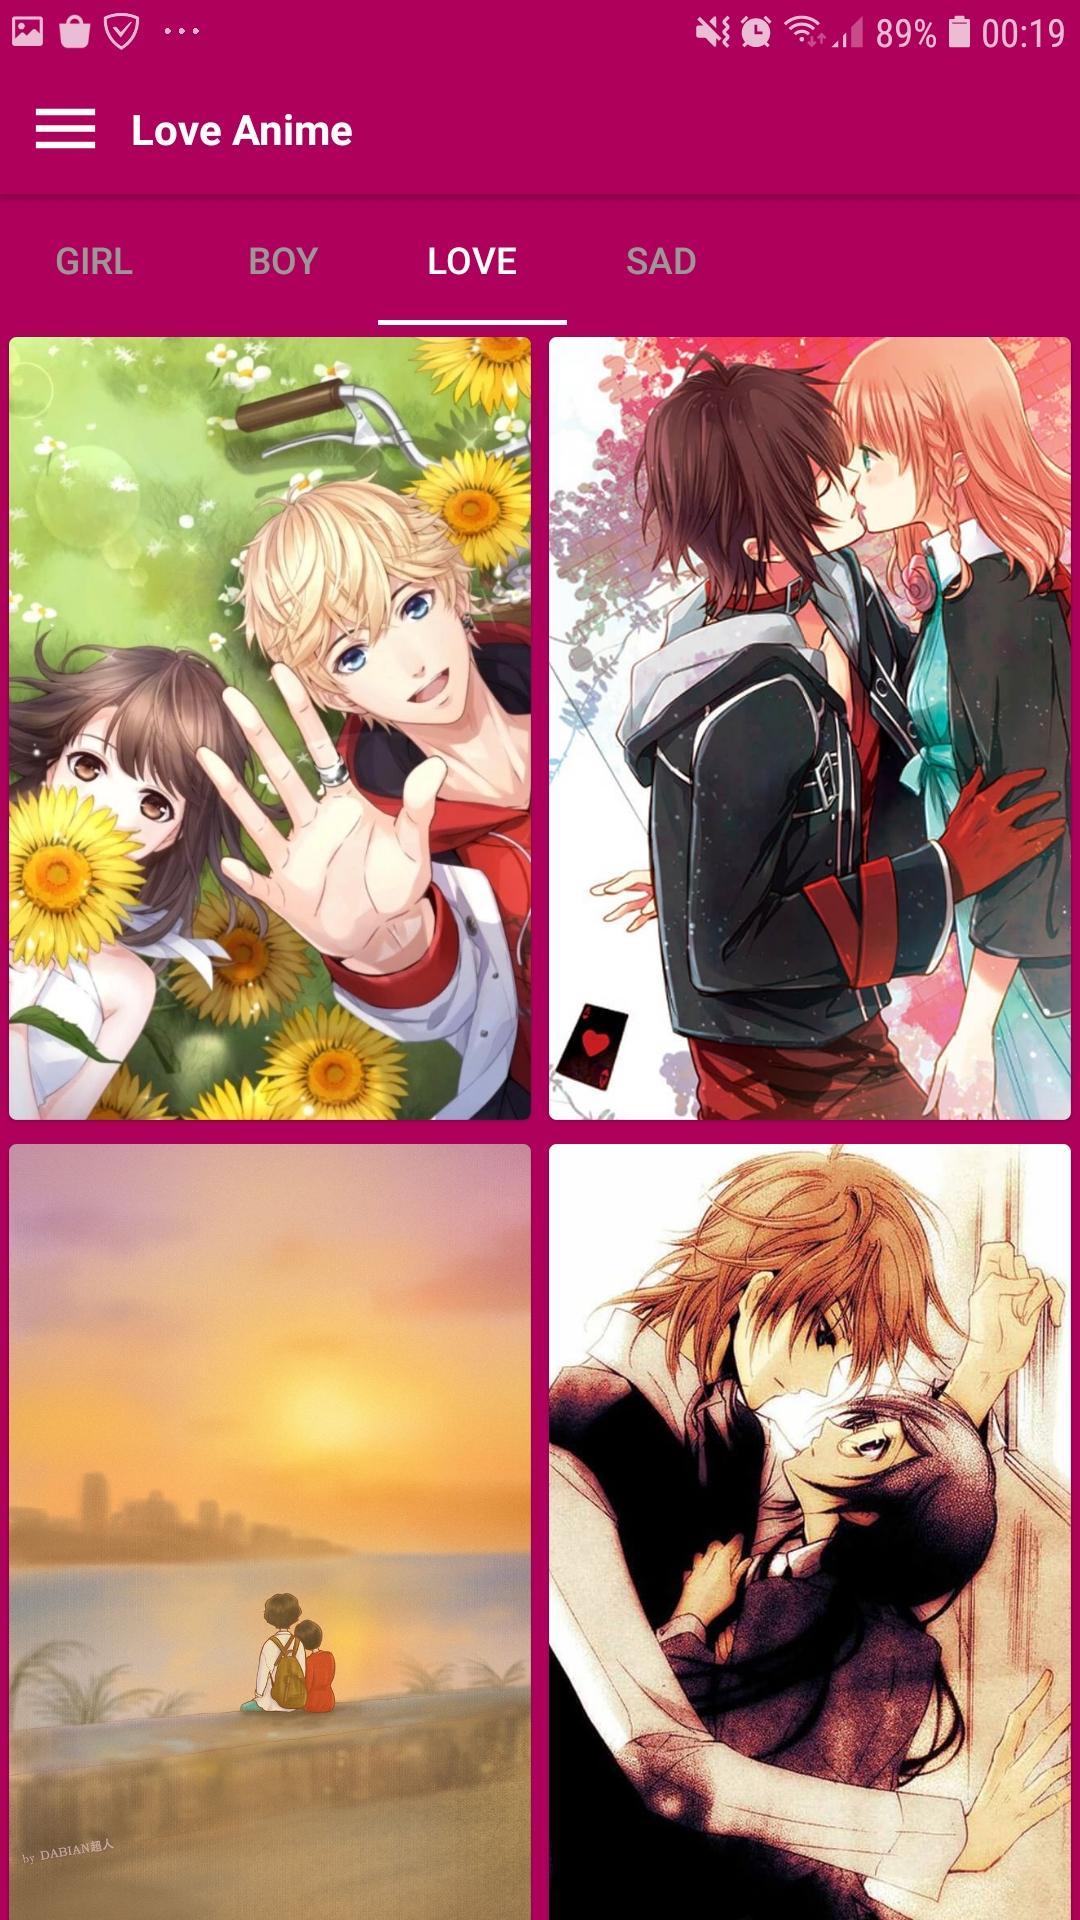 Anime Wallpaper Anime Girl Boy Love Sad Wallpaper For Android Apk Download